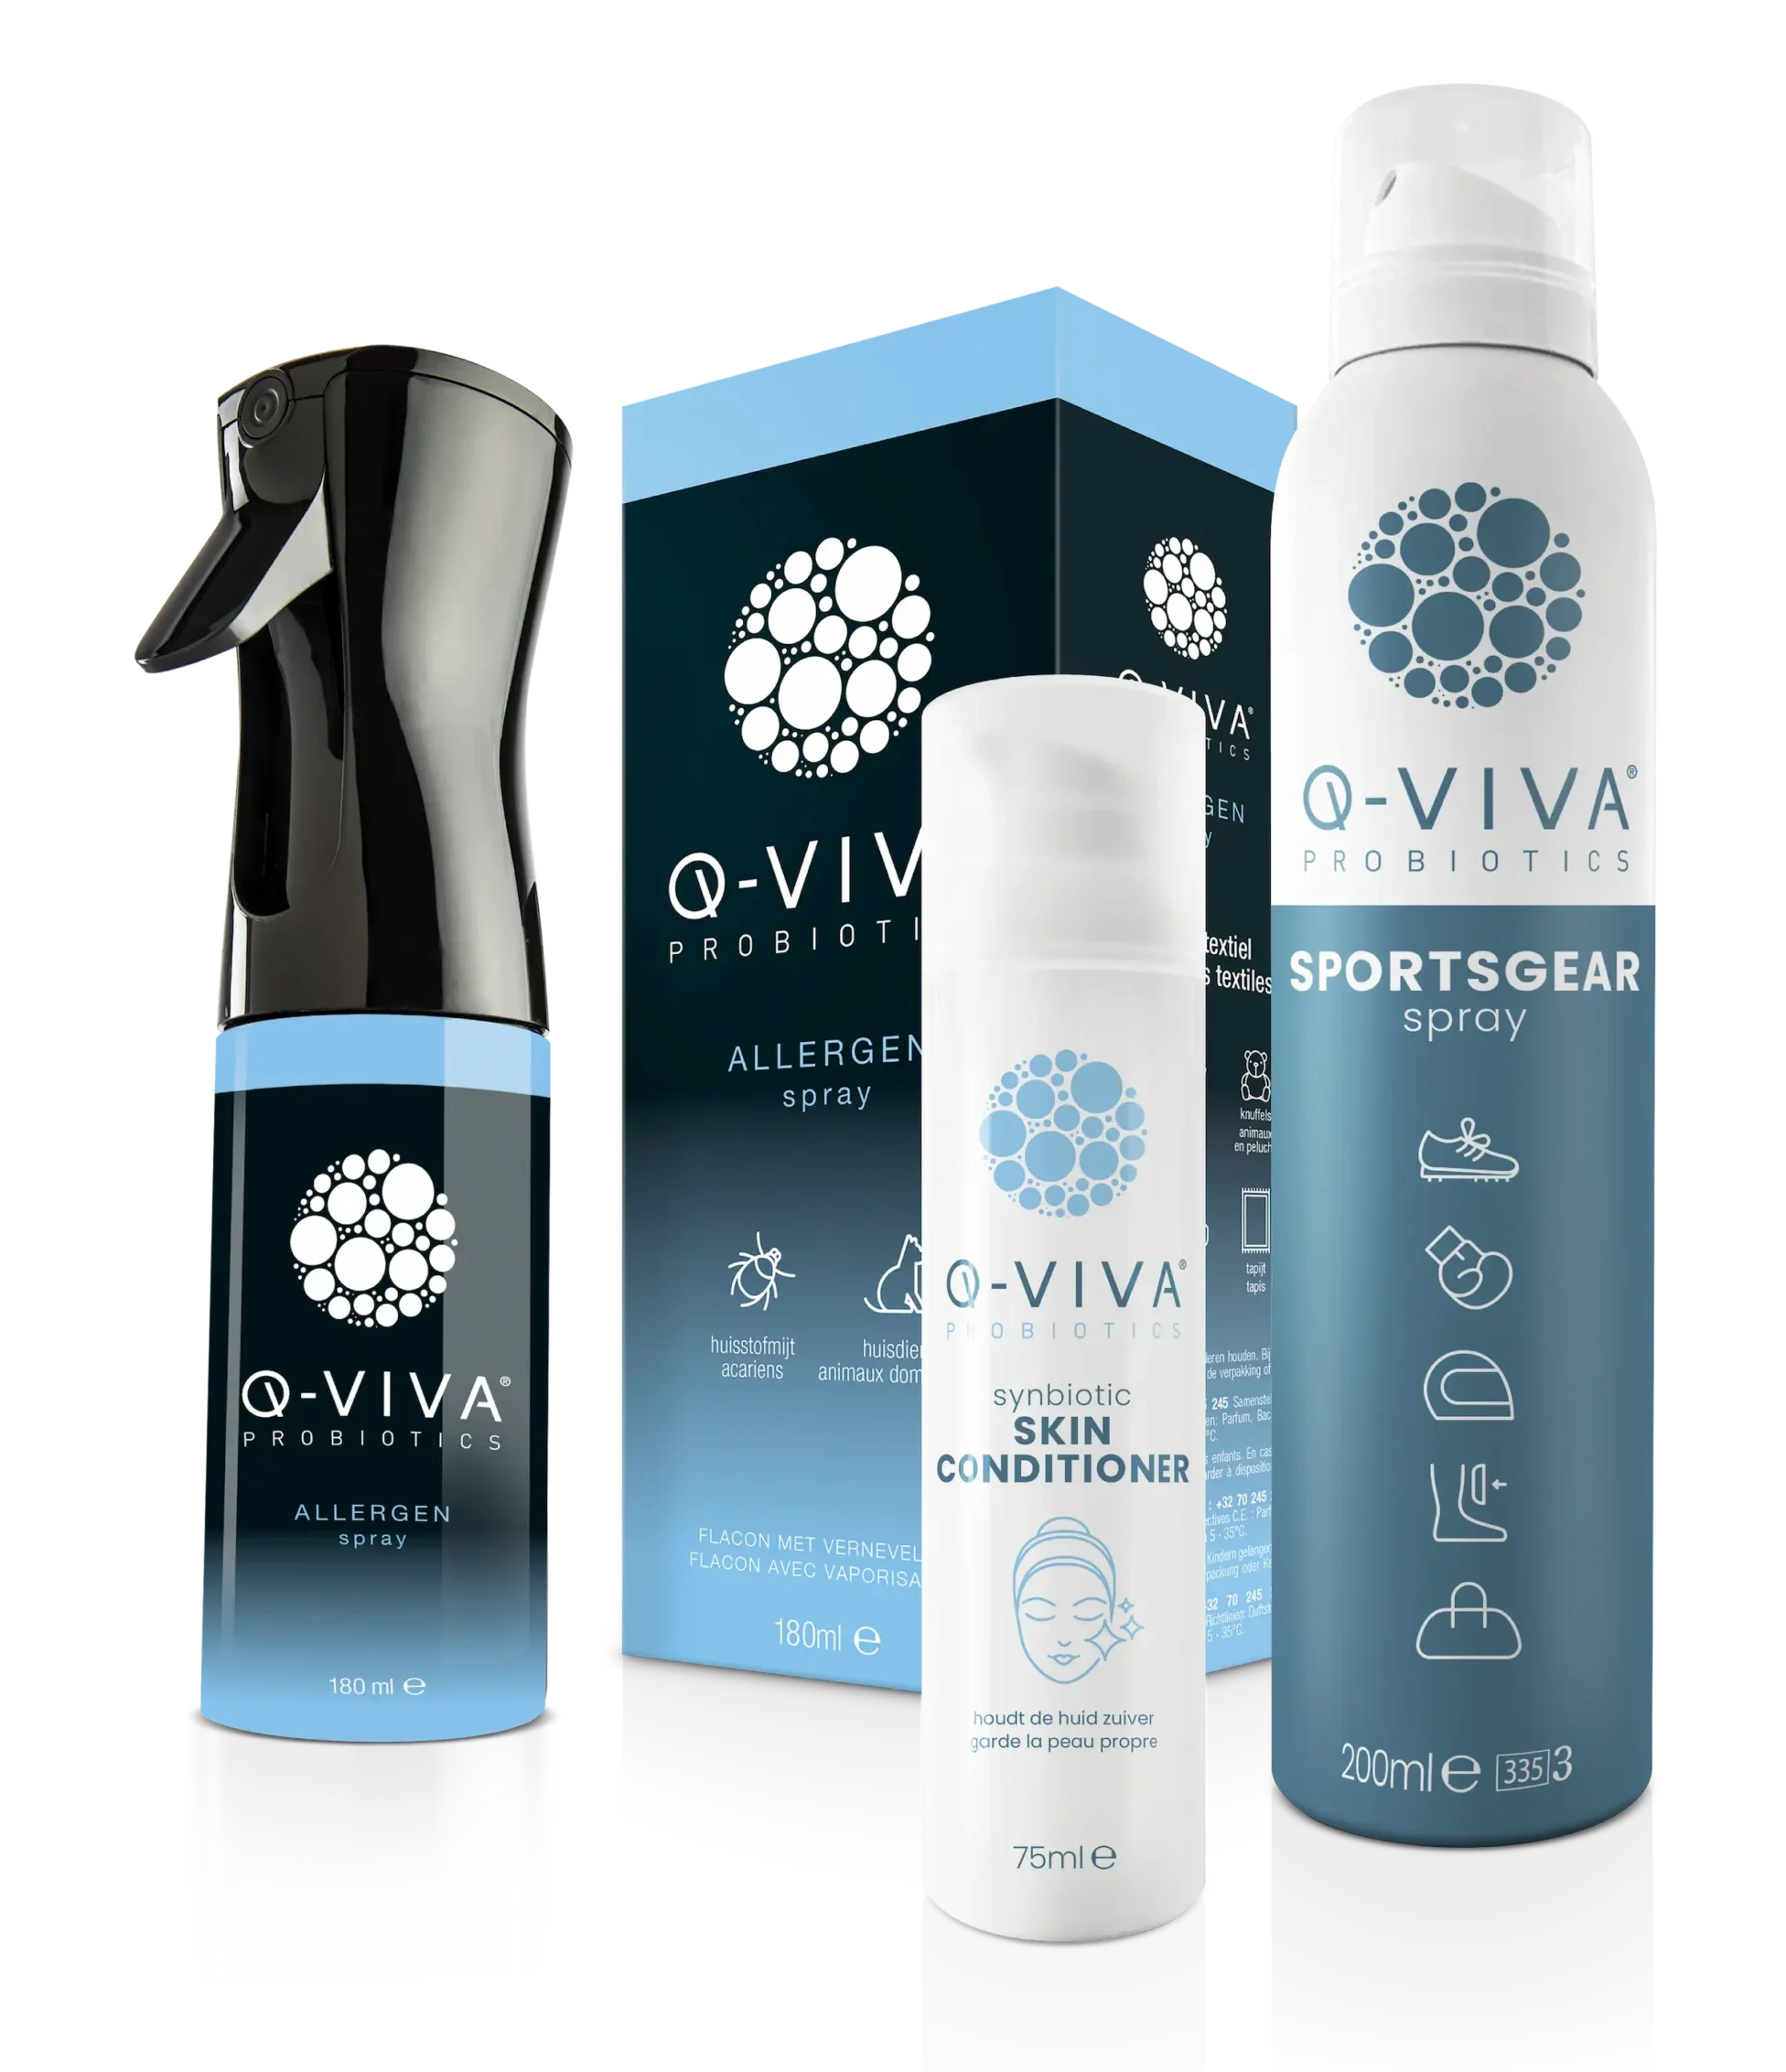 Q viva products